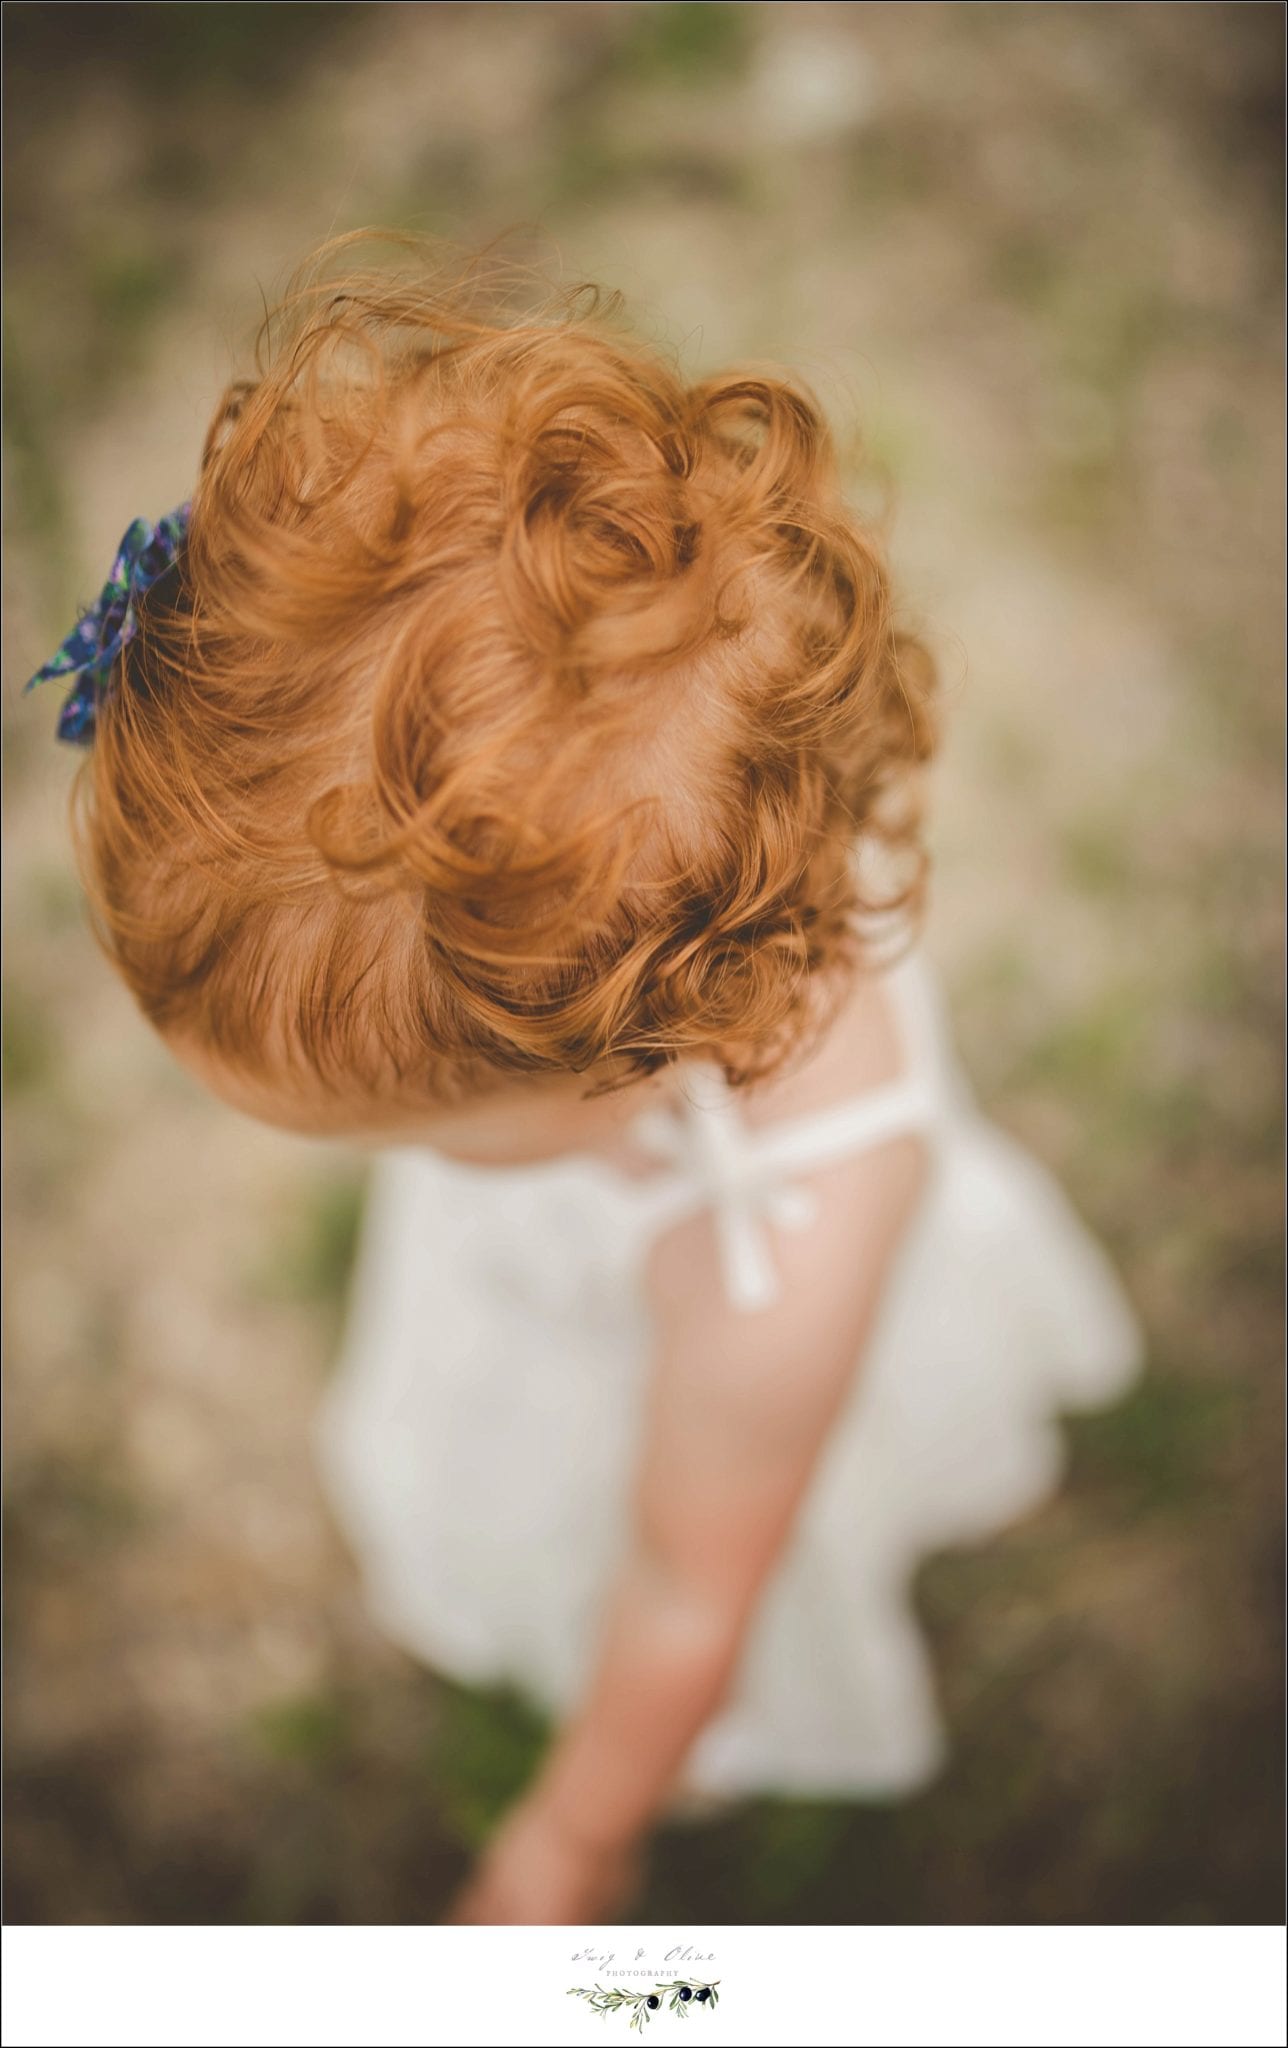 white dress, blue hair flower, red hair